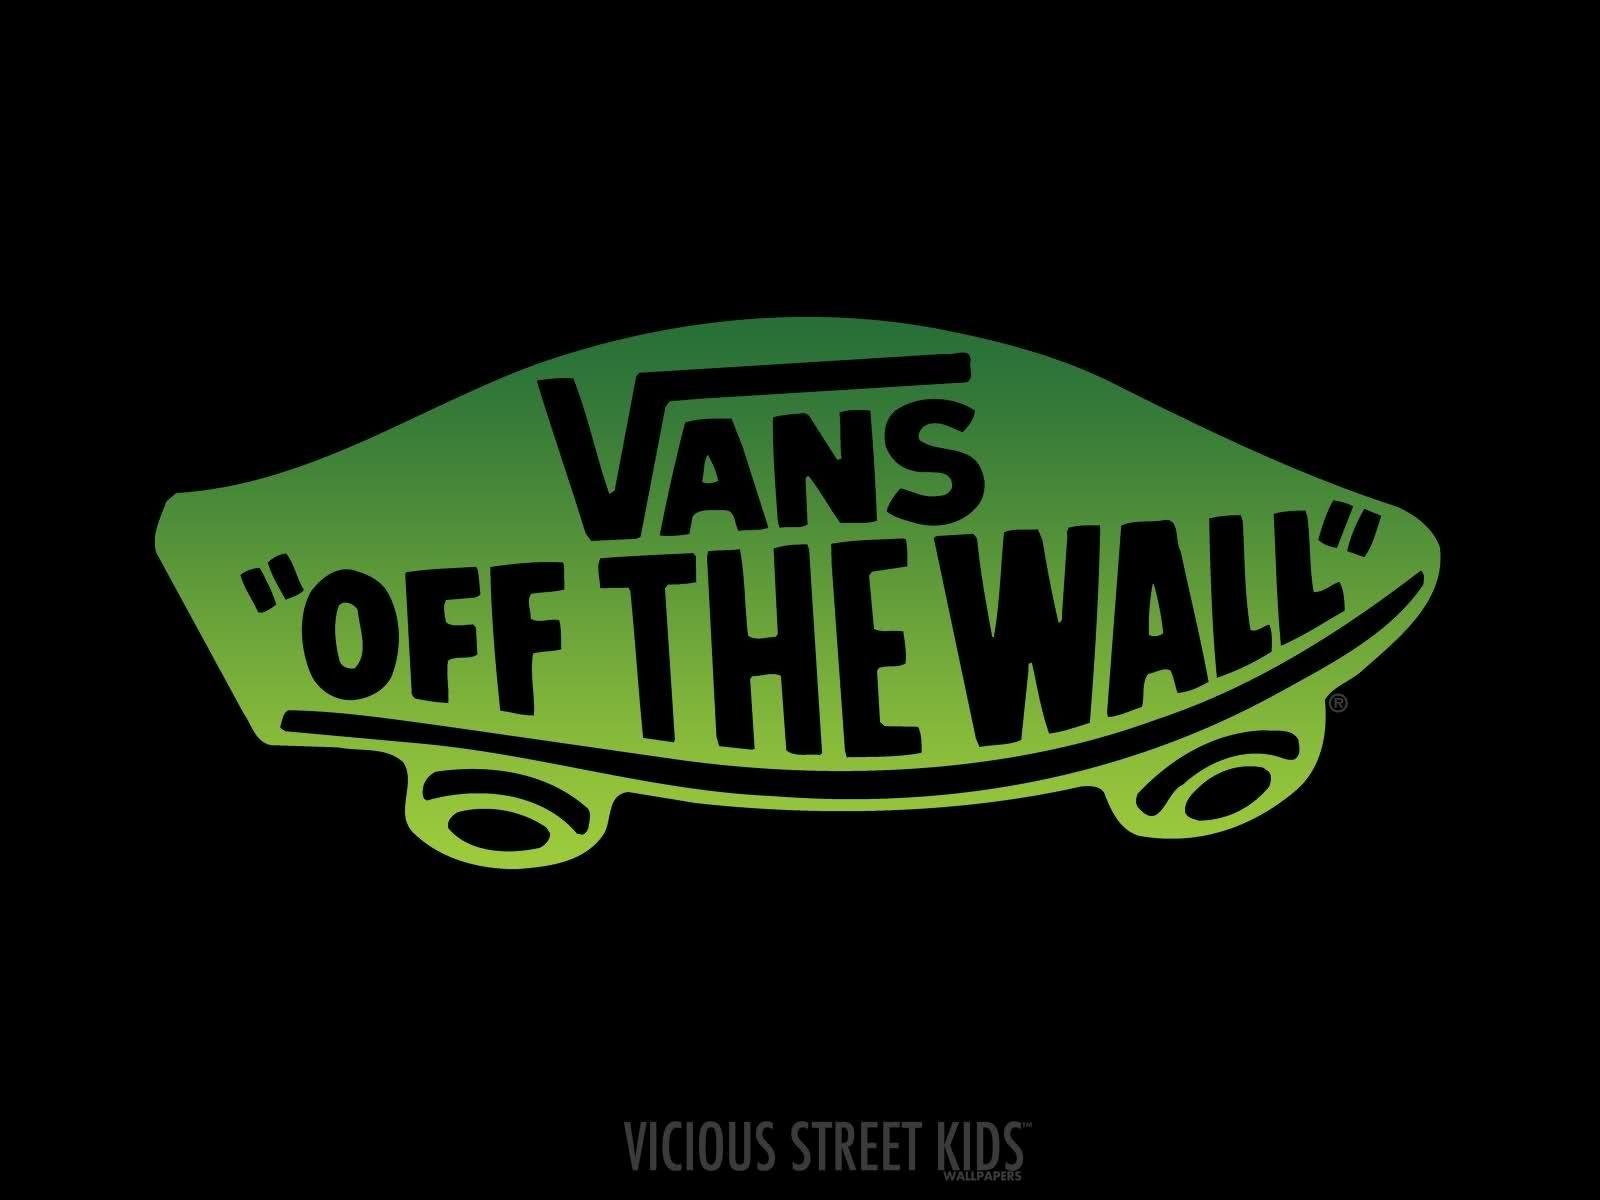 Vans Skateboard Wallpaper High Quality • dodskypict